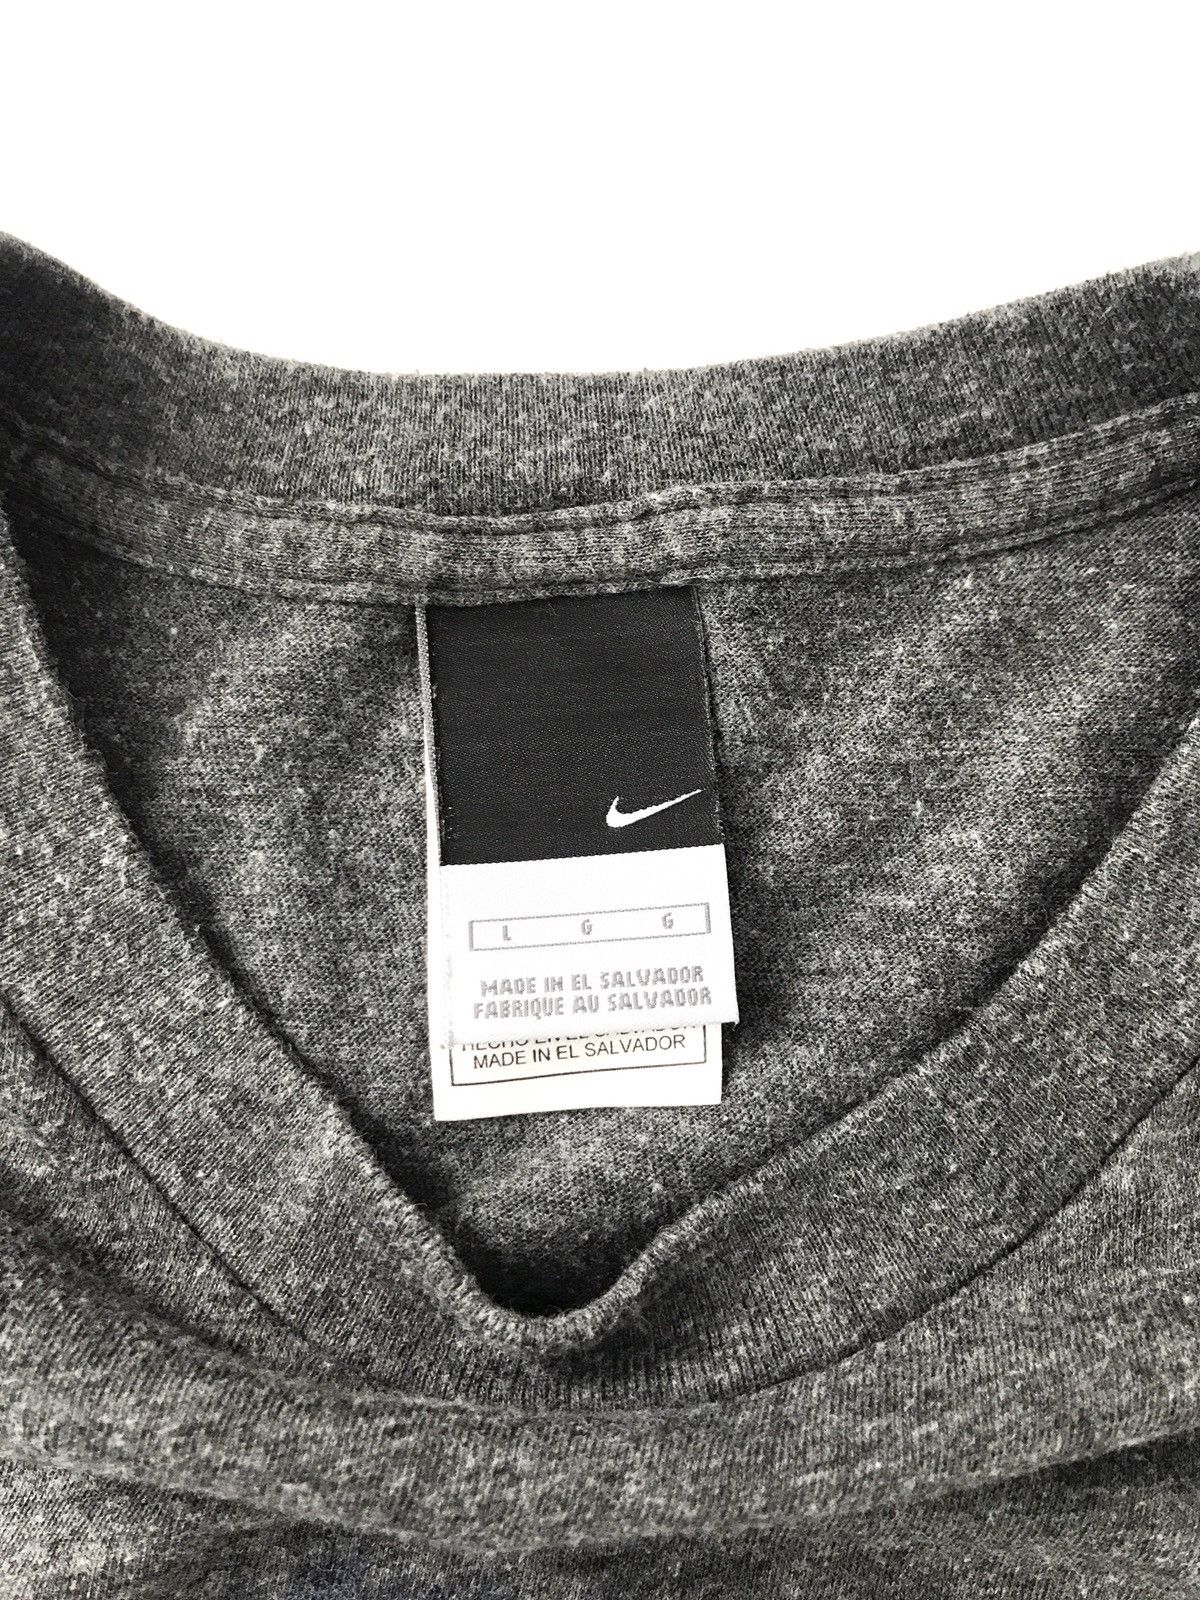 Nike Vintage Nike Silver Tag Basketball T-shirt Size US L / EU 52-54 / 3 - 3 Thumbnail